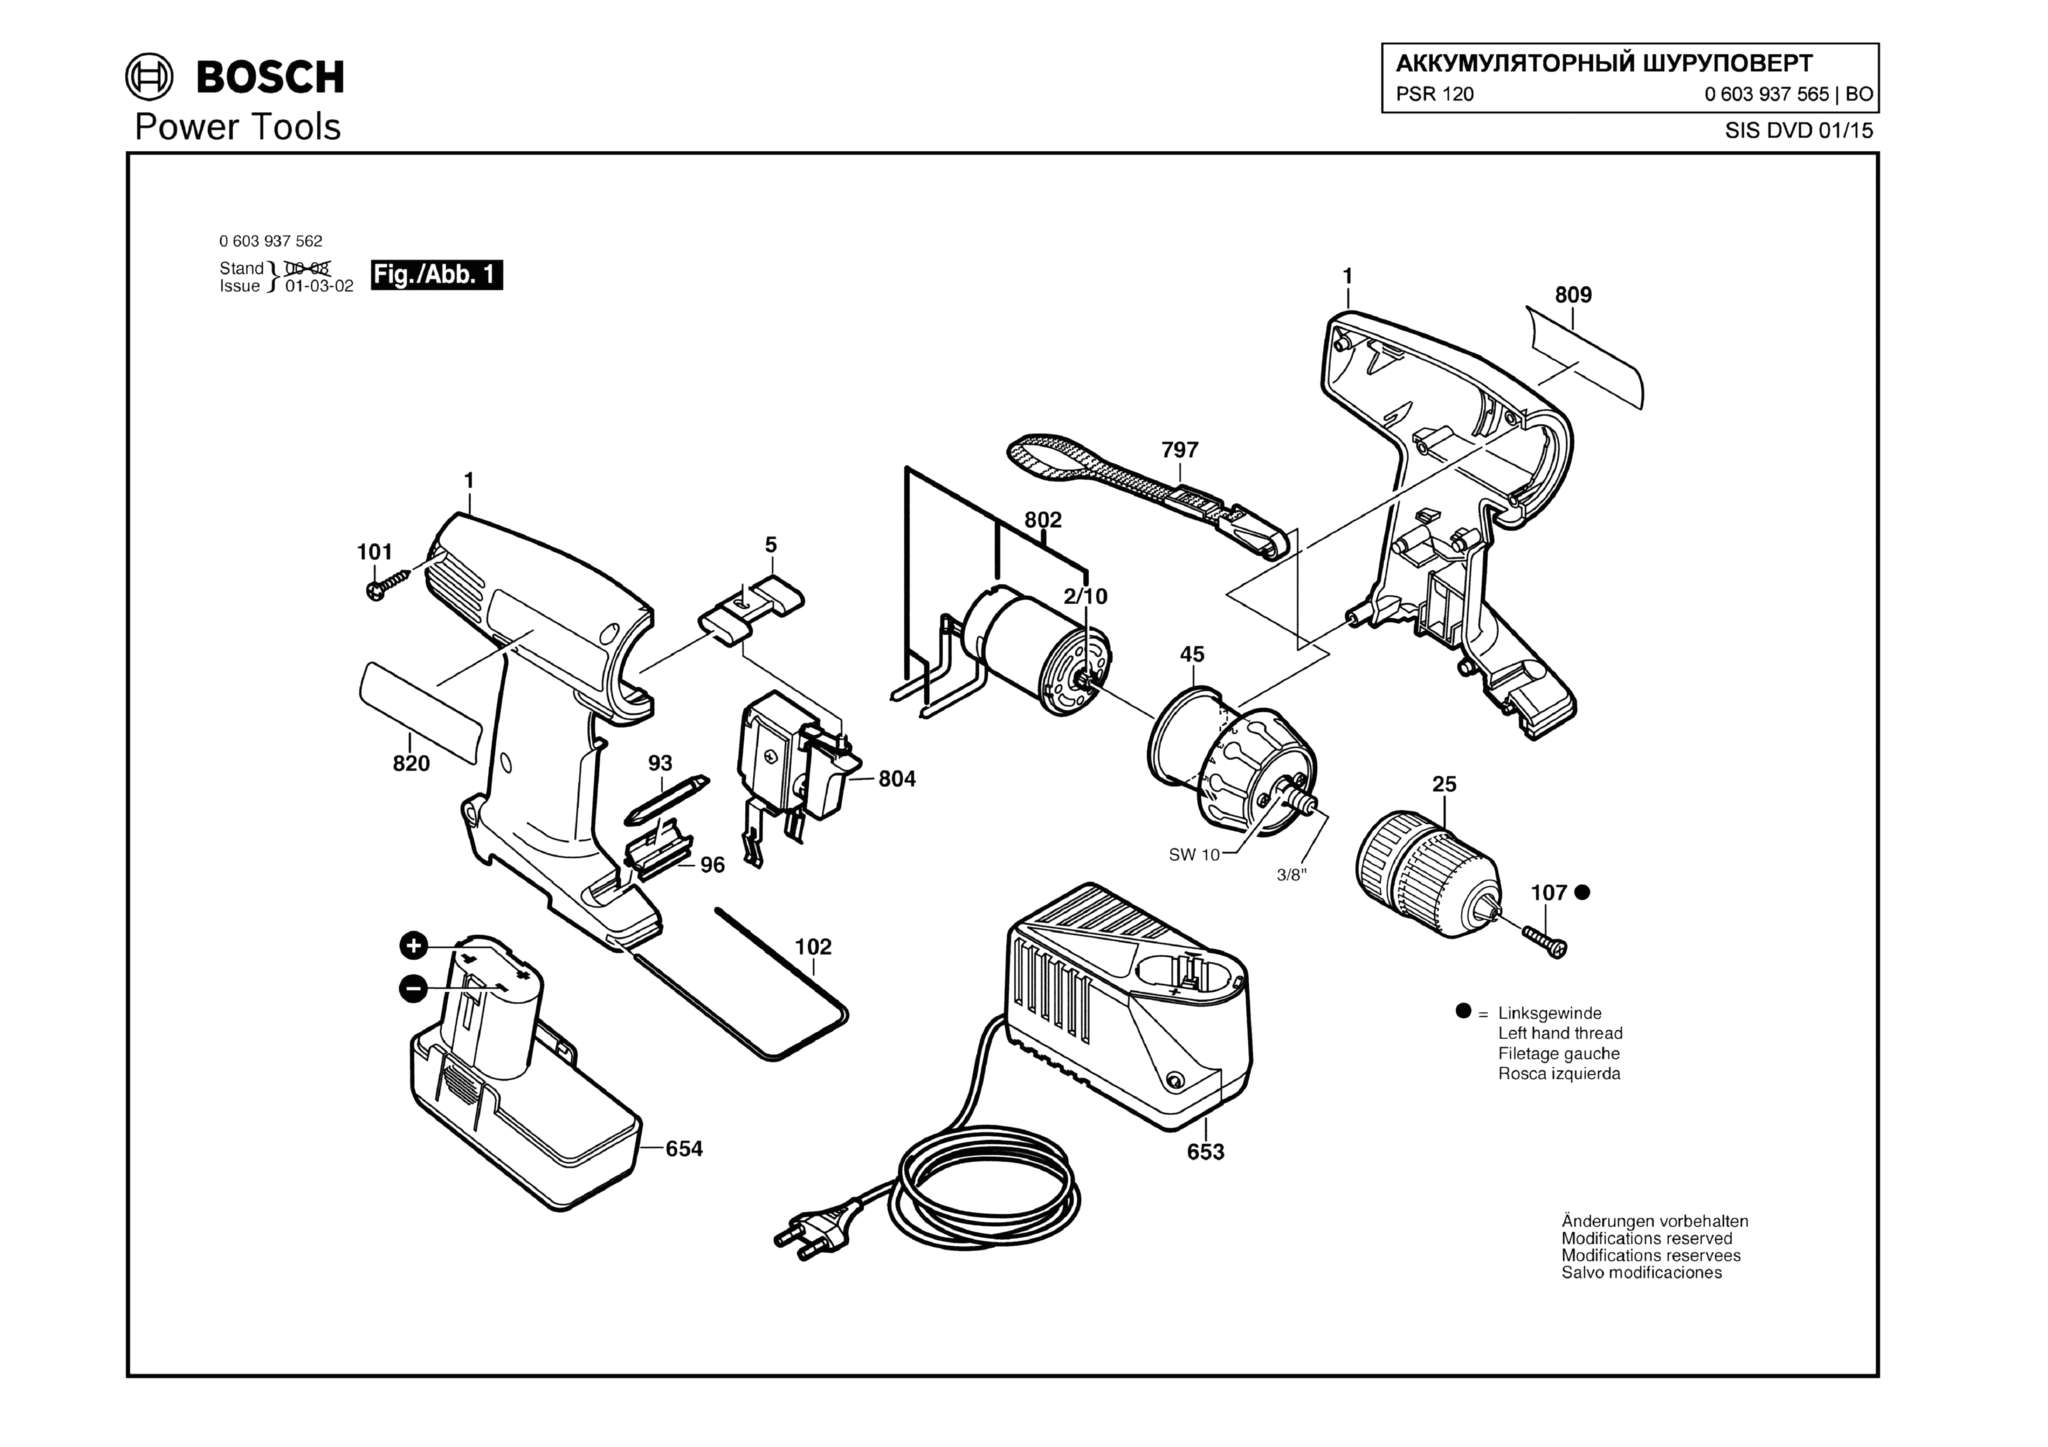 Запчасти, схема и деталировка Bosch PSR 120 (ТИП 0603937565)